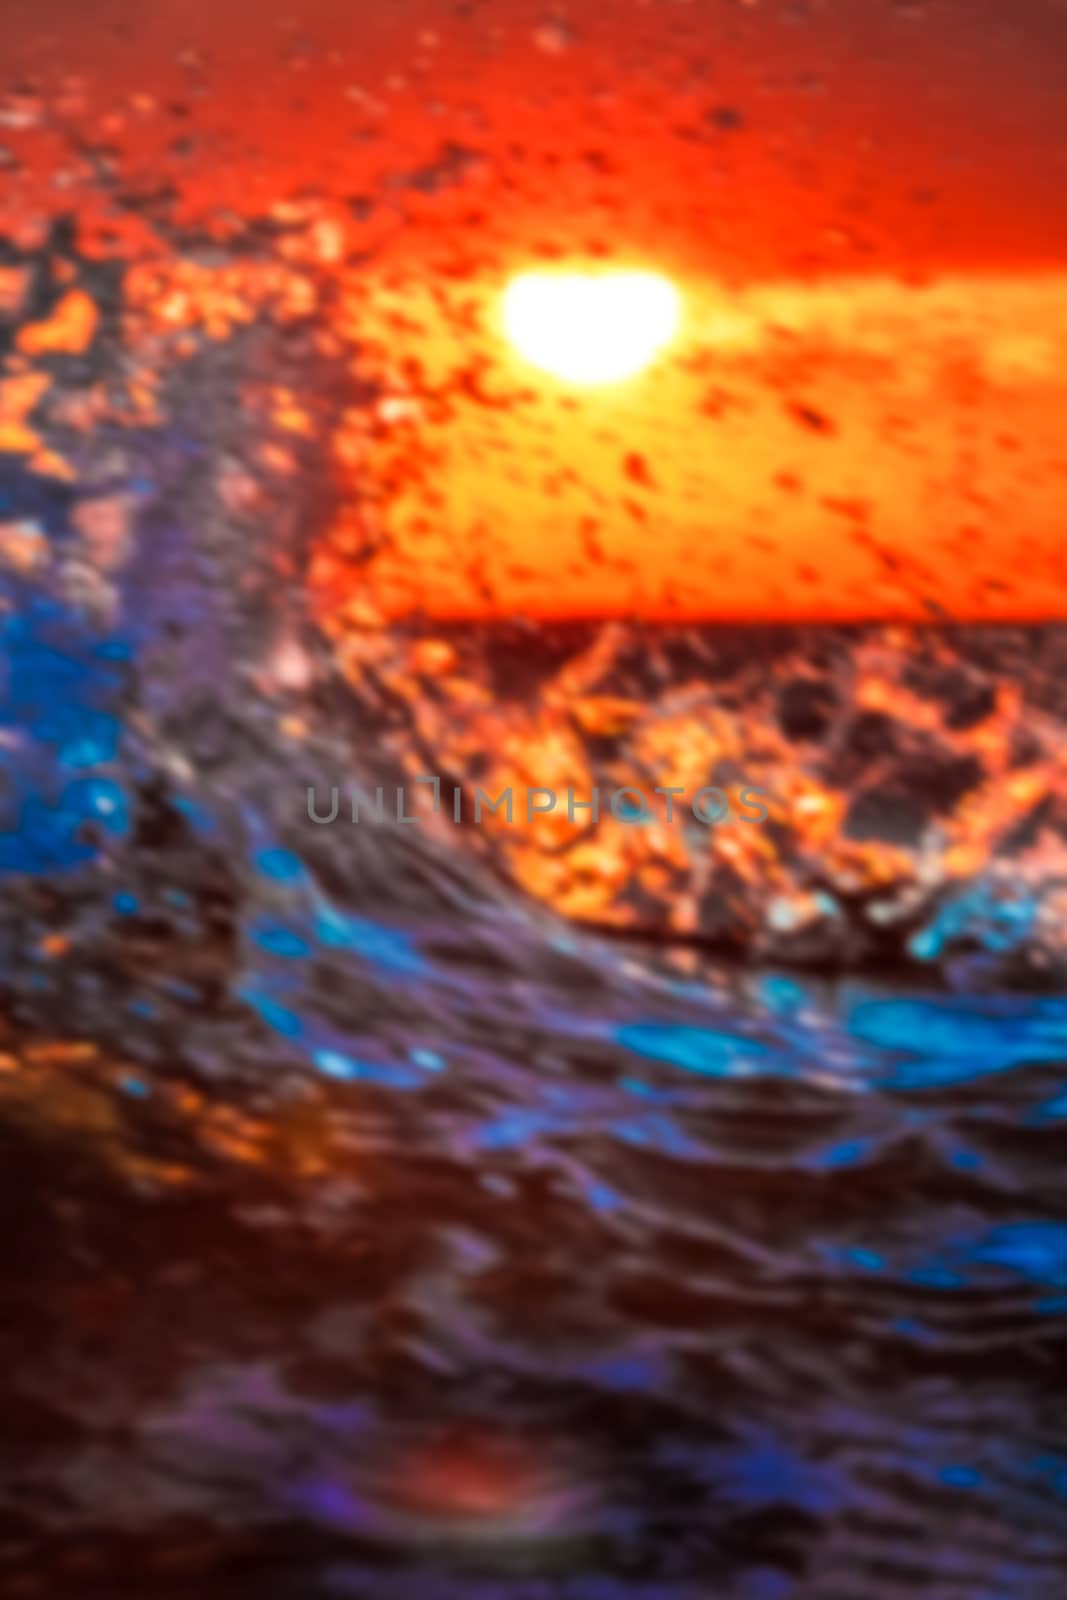 Hot sunset - soft lens bokeh image. Defocused background